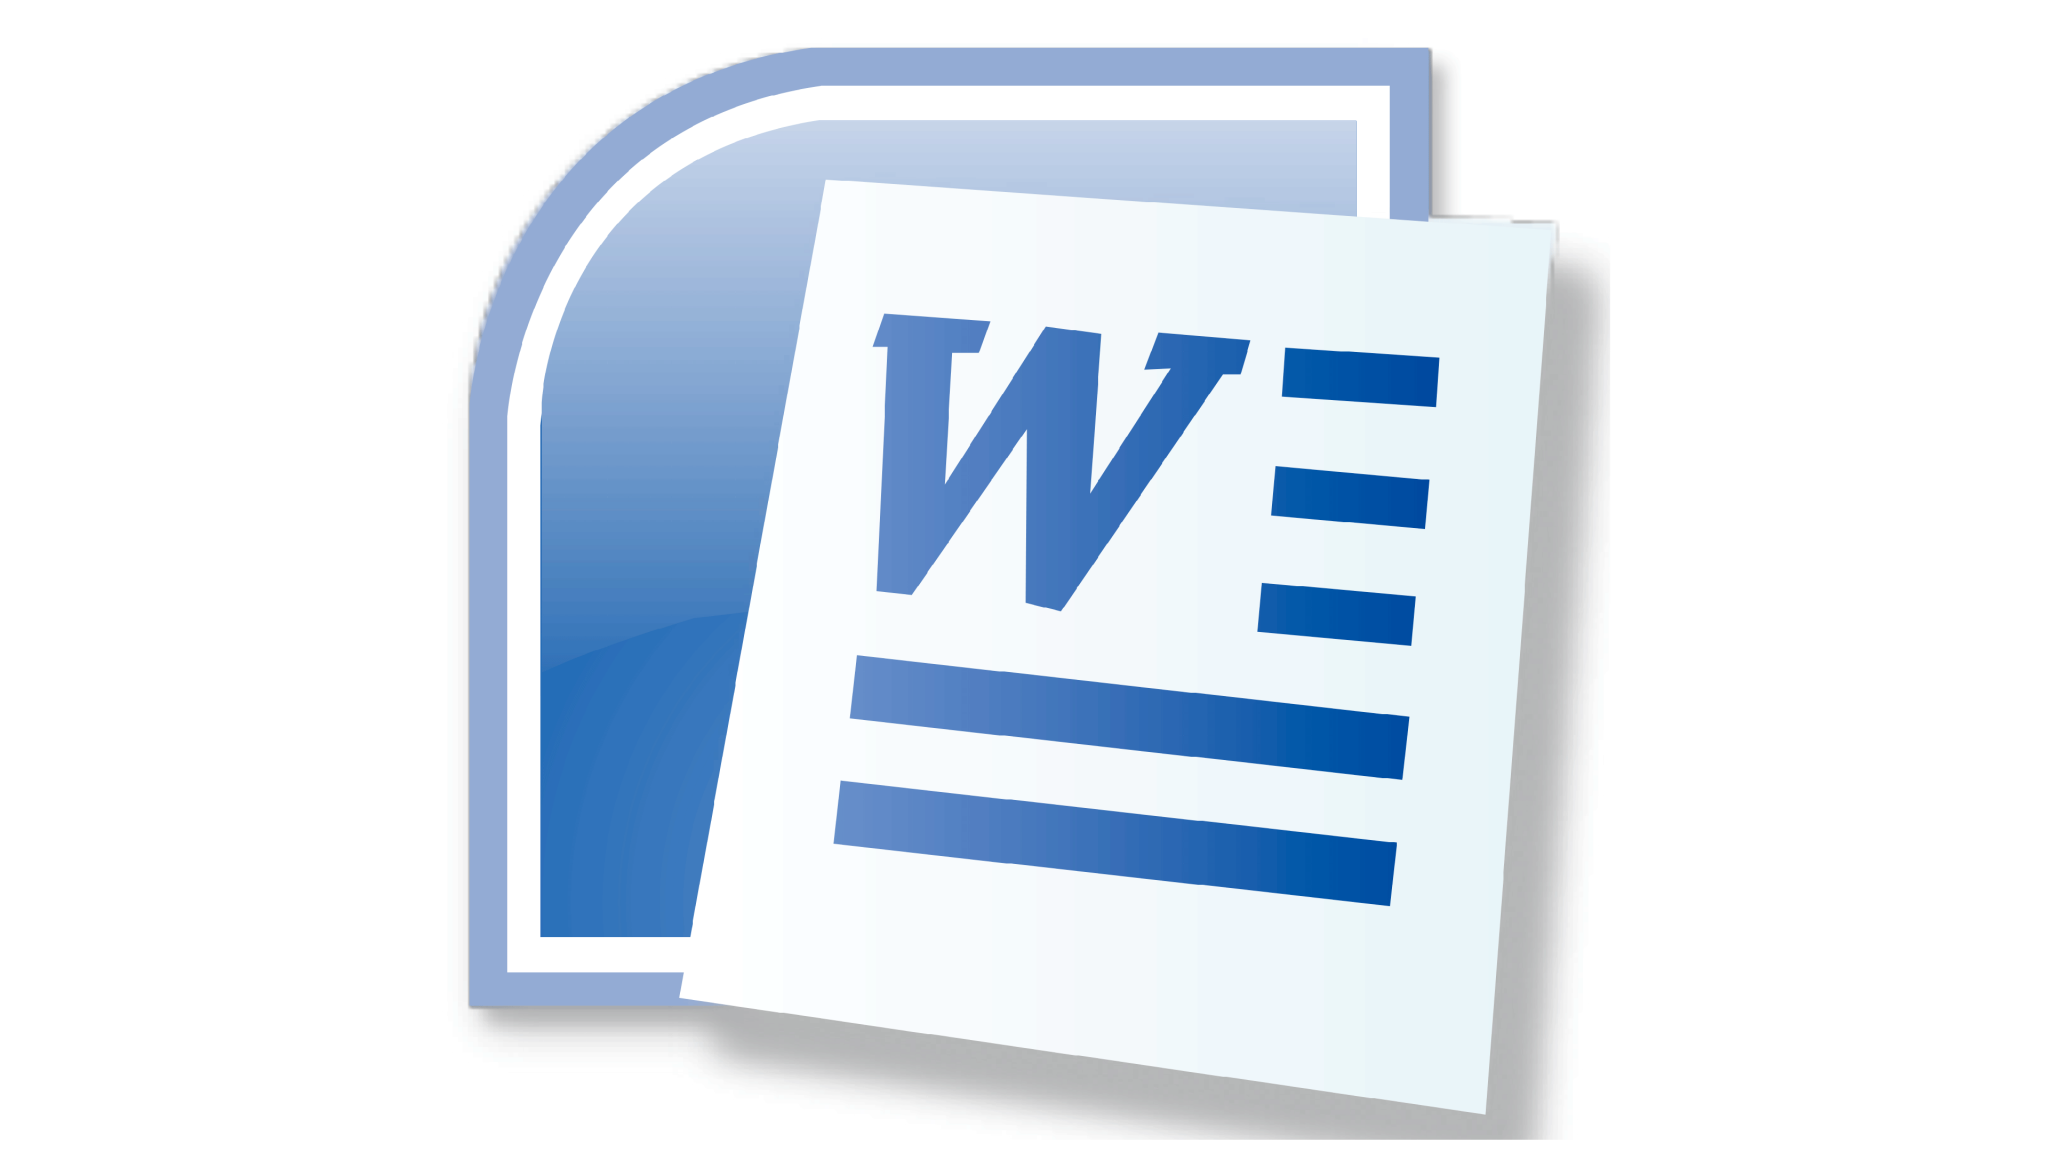 Word icon. Microsoft Office Word логотип. Значок Майкрософт ворд 2010. MS Word 2007 значок. Microsoft Office Word 2010 логотип.